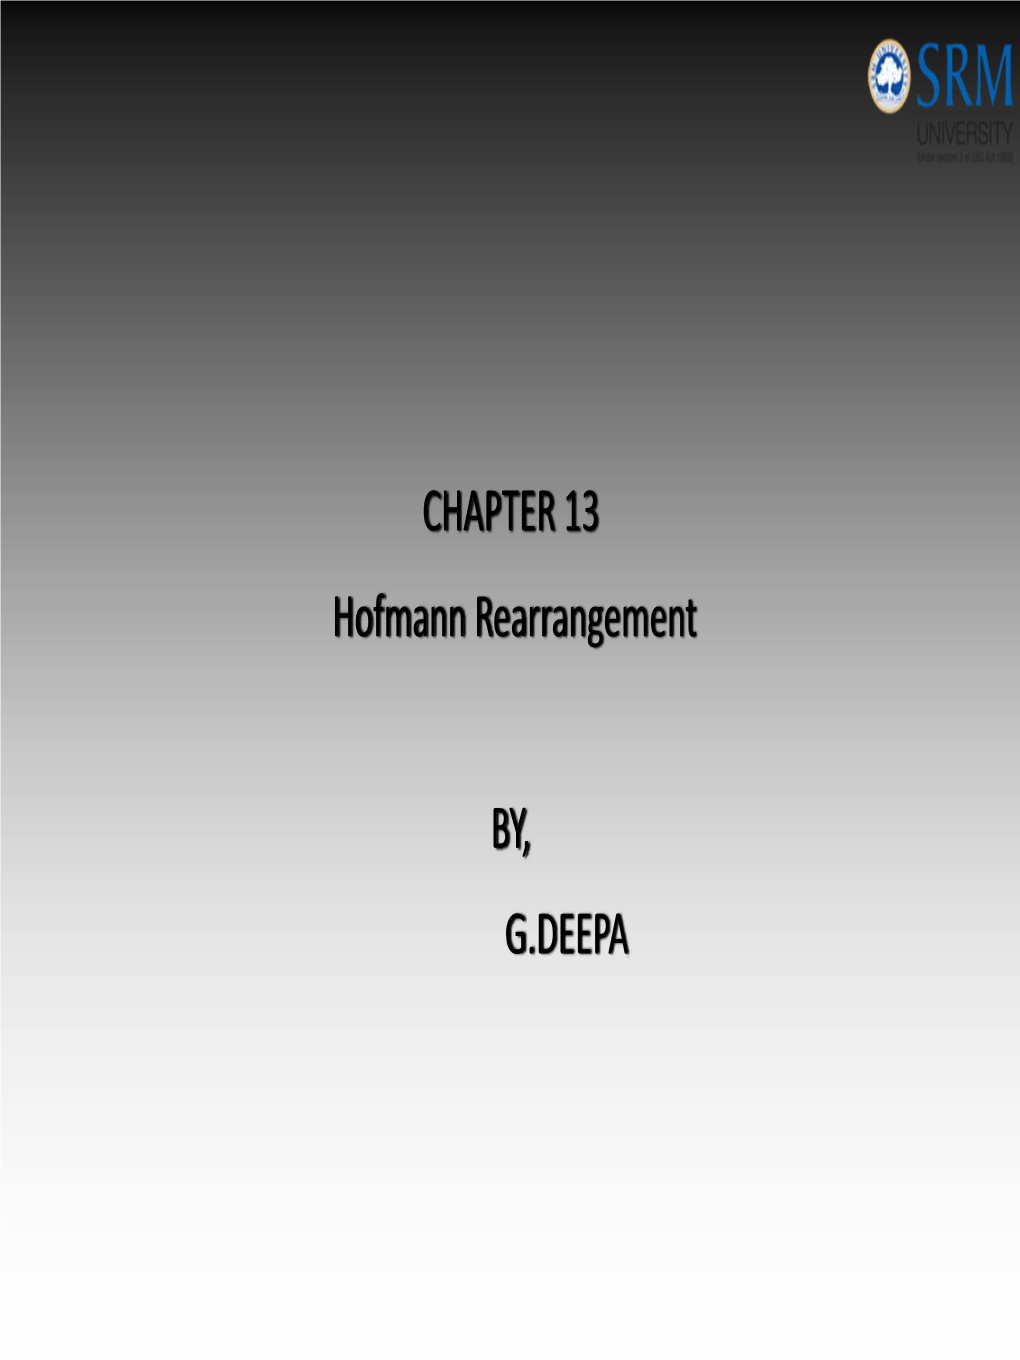 The Hofmann Rearrangement